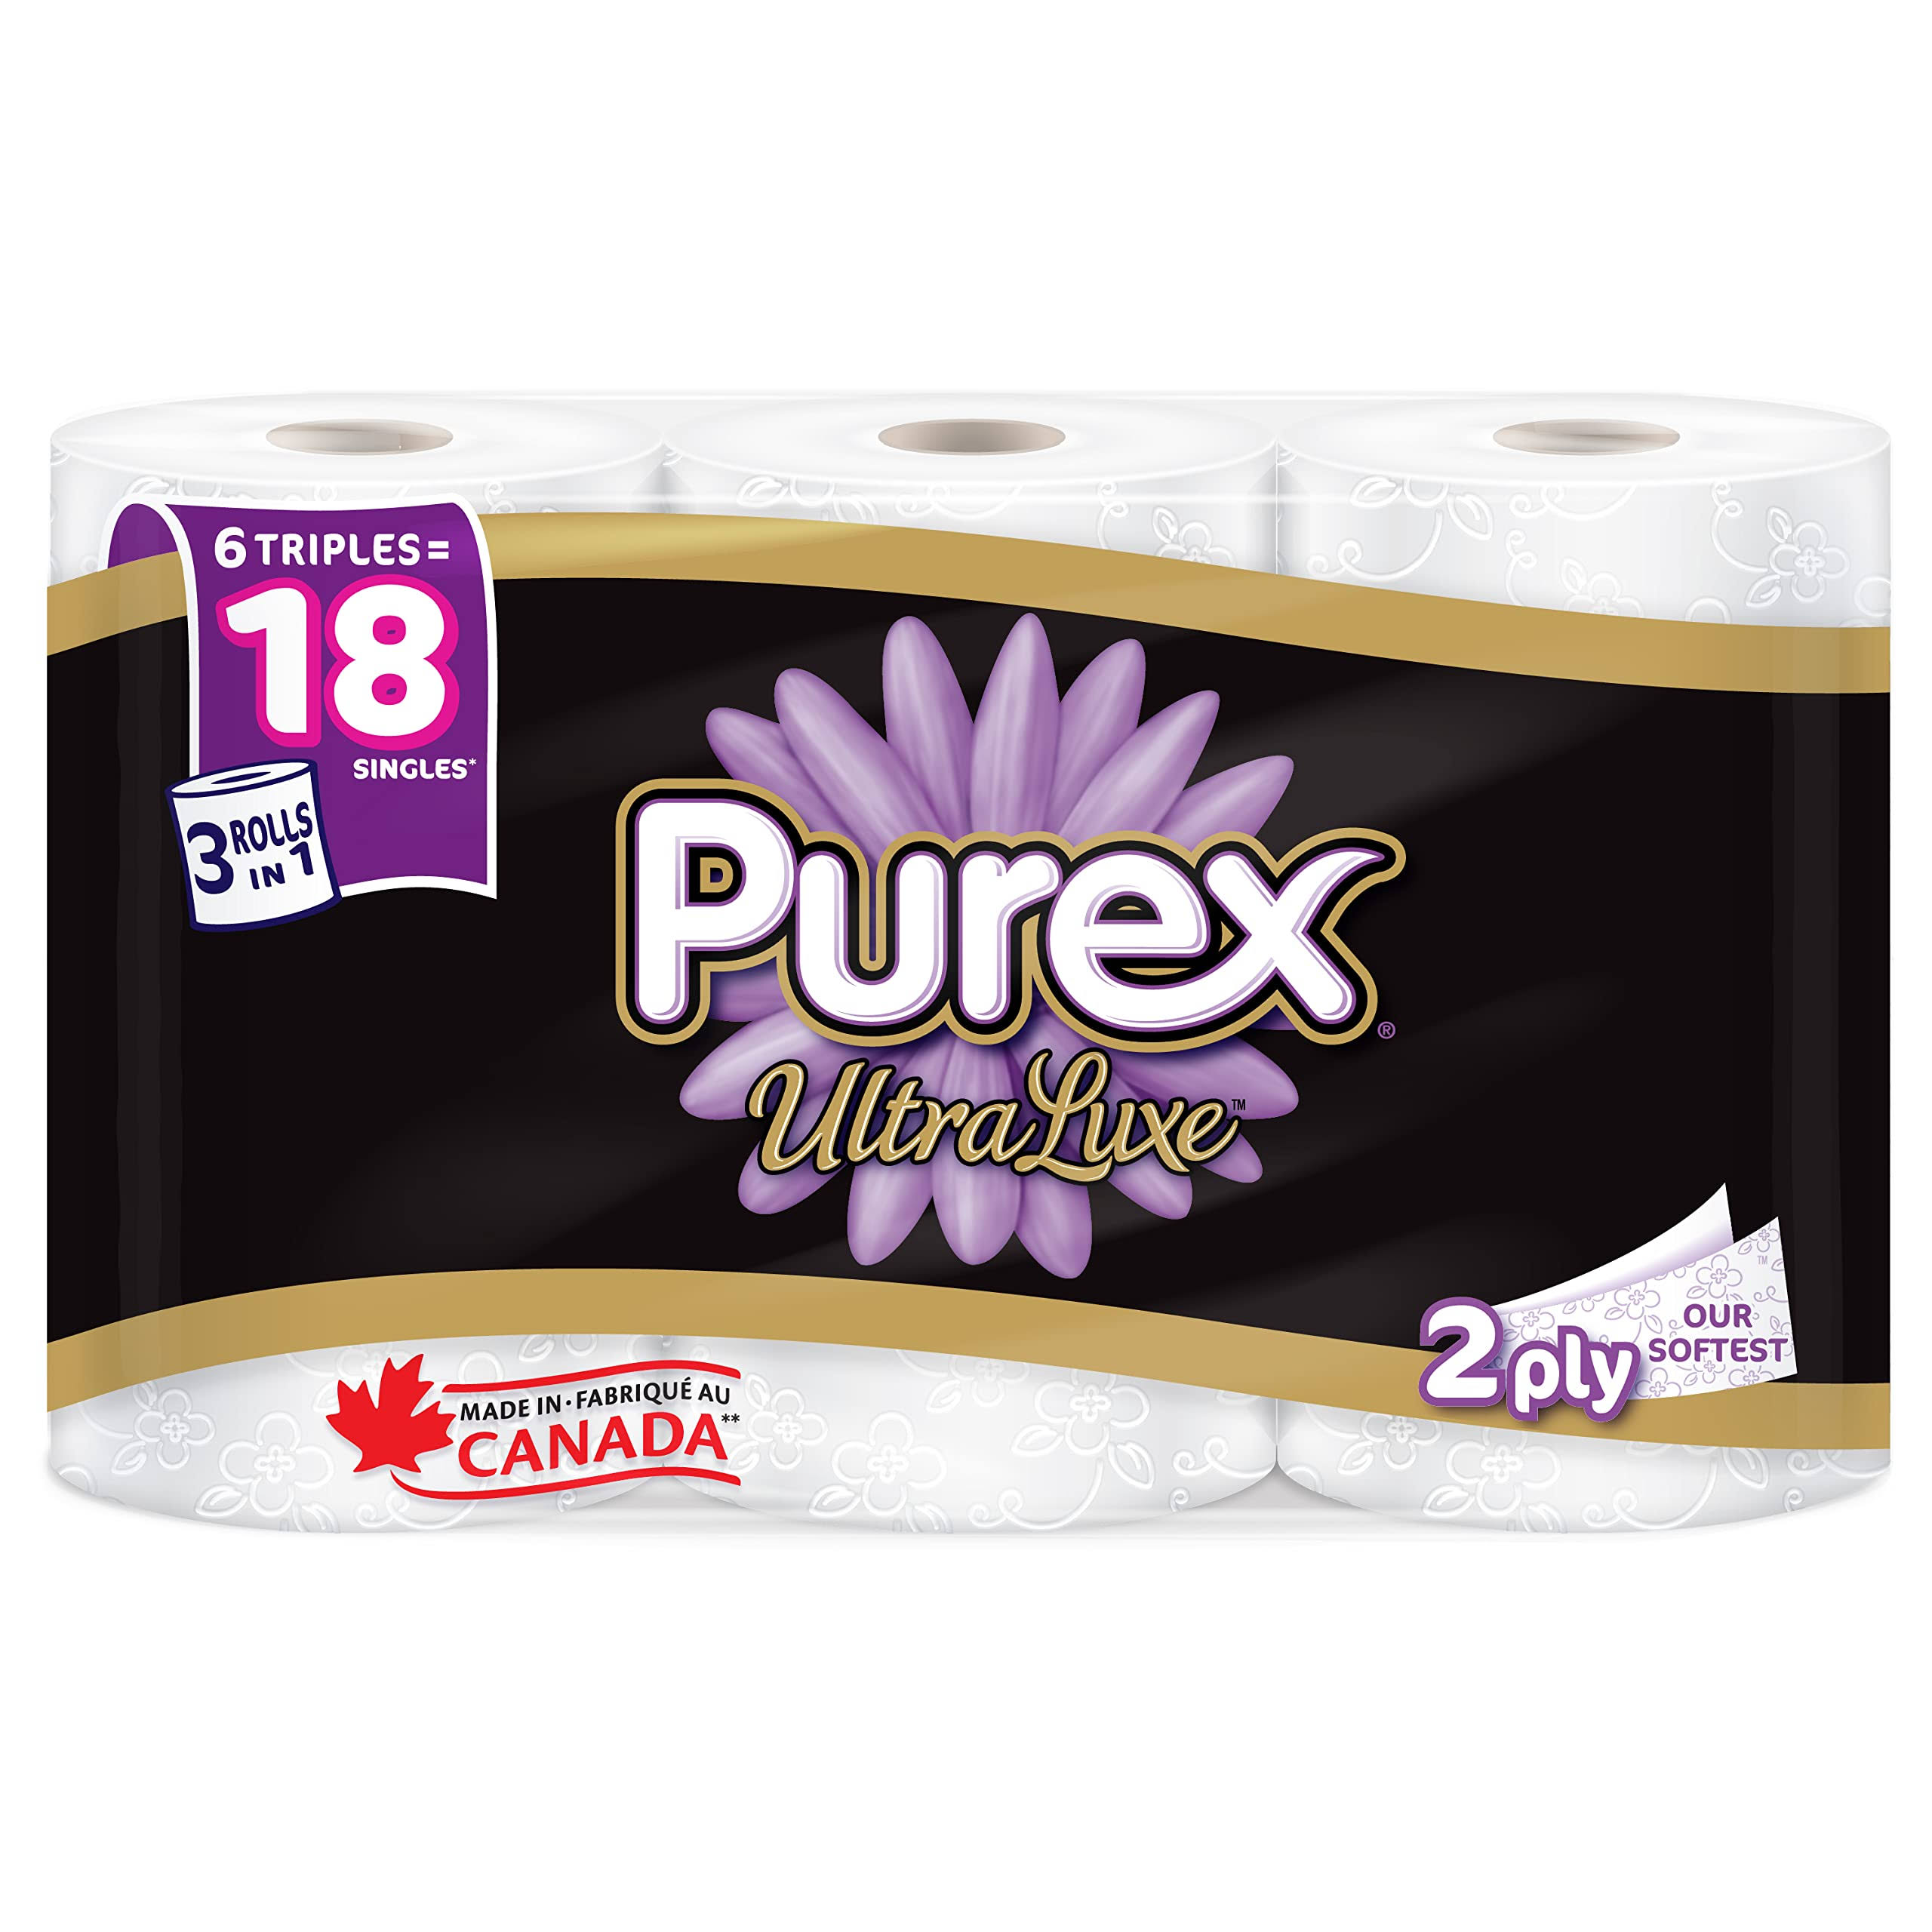 Purex UltraLuxe 2 Ply Bathroom Tissue - 6 ct